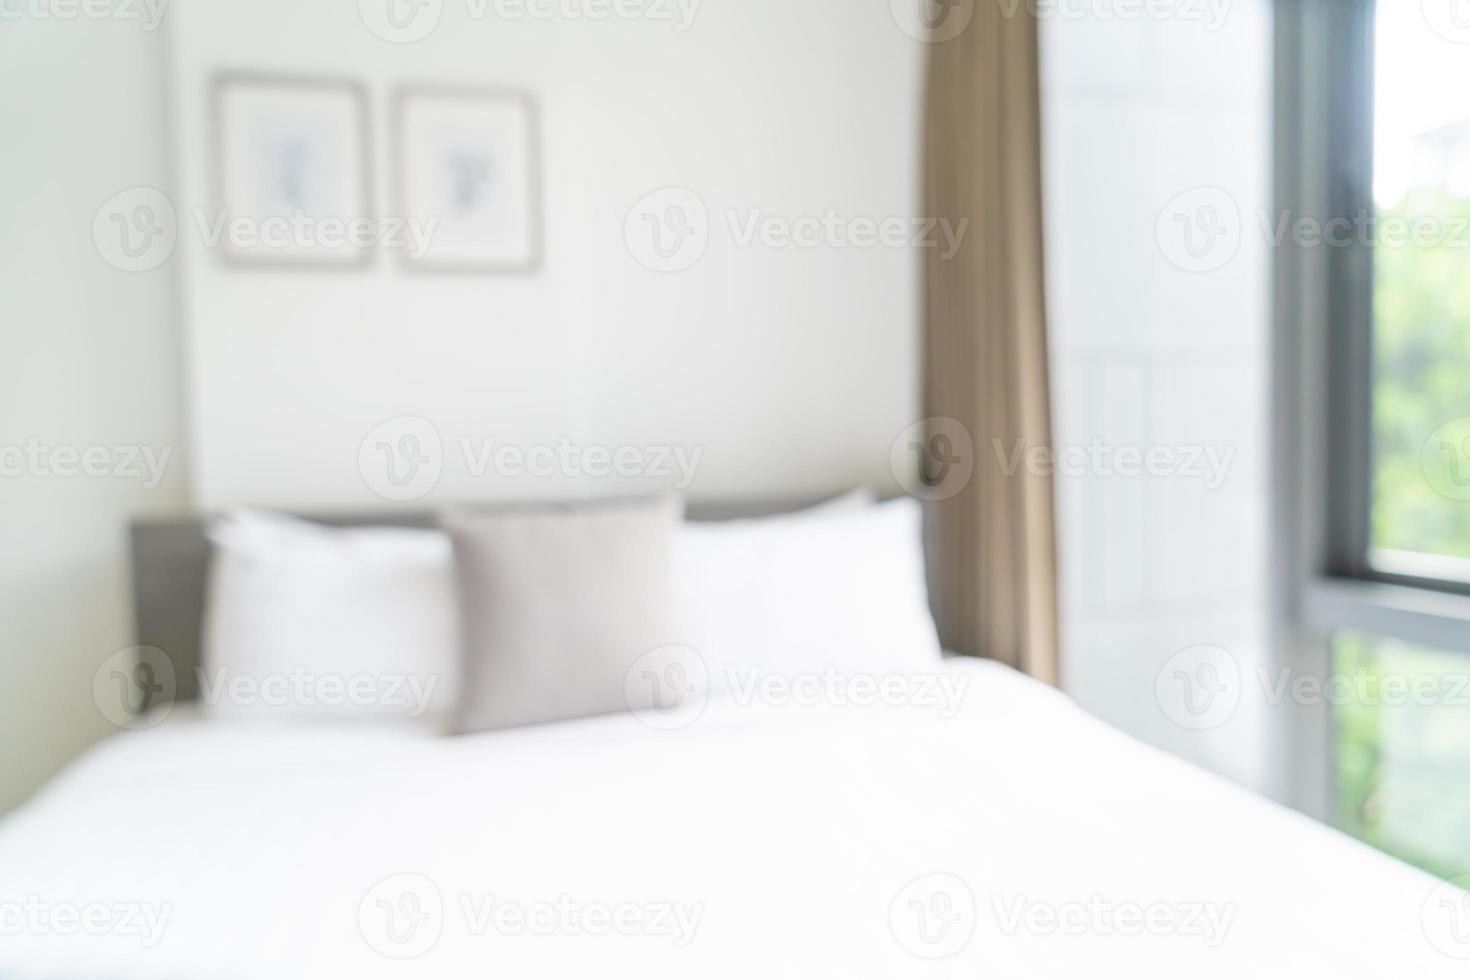 desfoque abstrato e quarto de resort de hotel desfocado para segundo plano foto